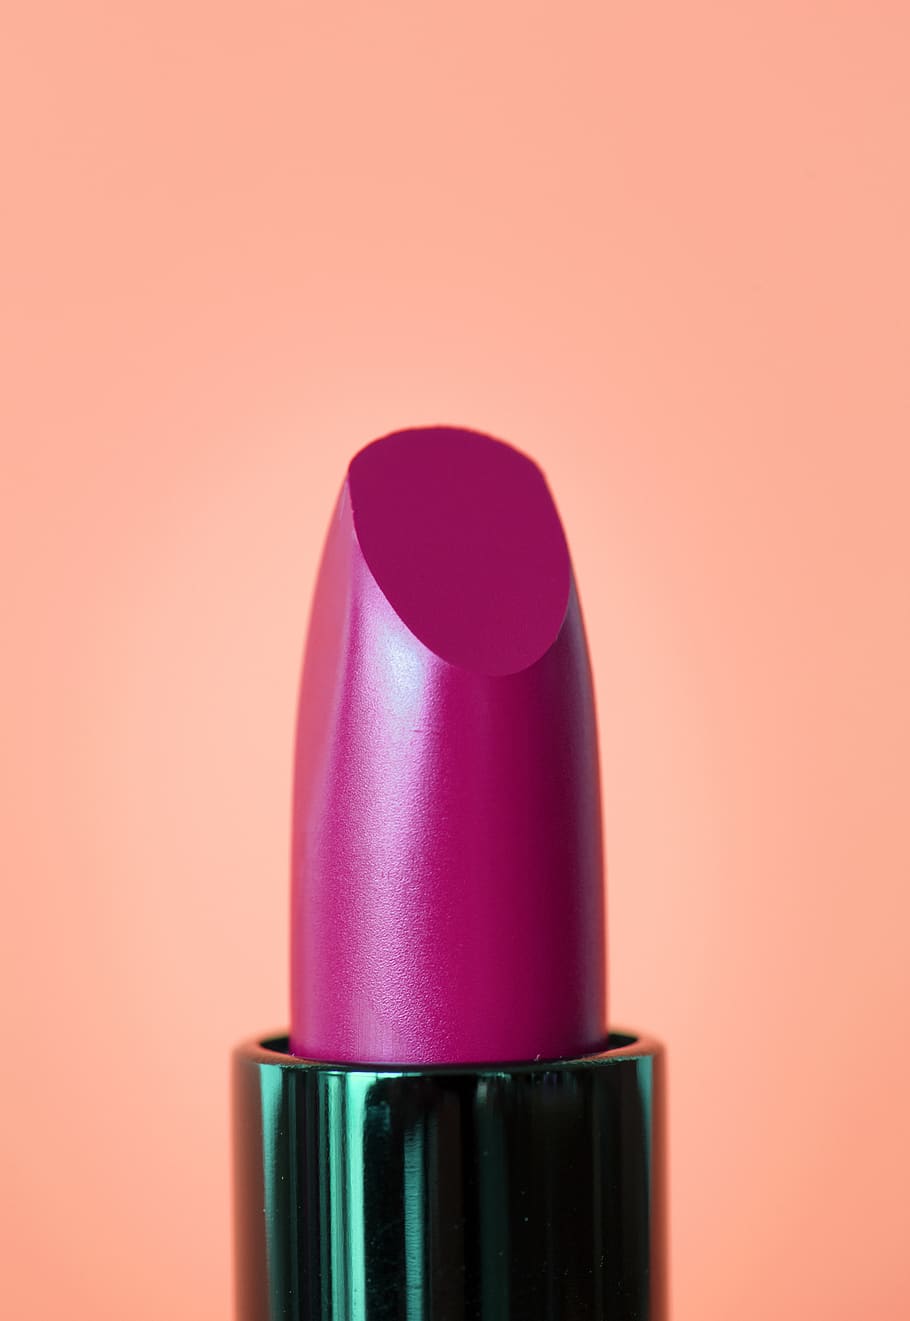 Lipsticks Pictures  Download Free Images on Unsplash